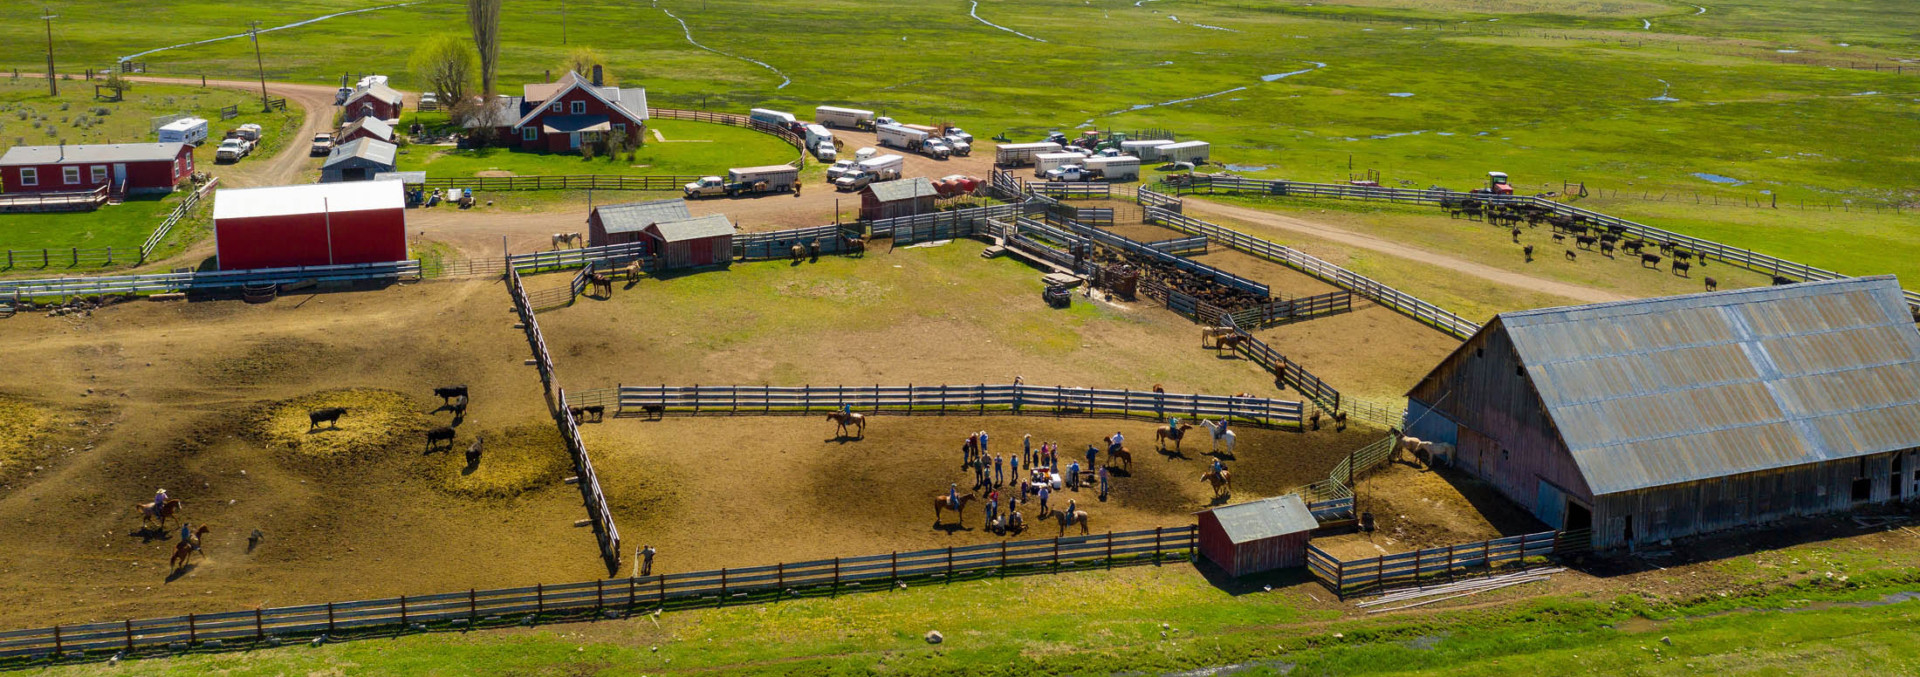 Oregon Cattle Ranch for Sale BK Ranch